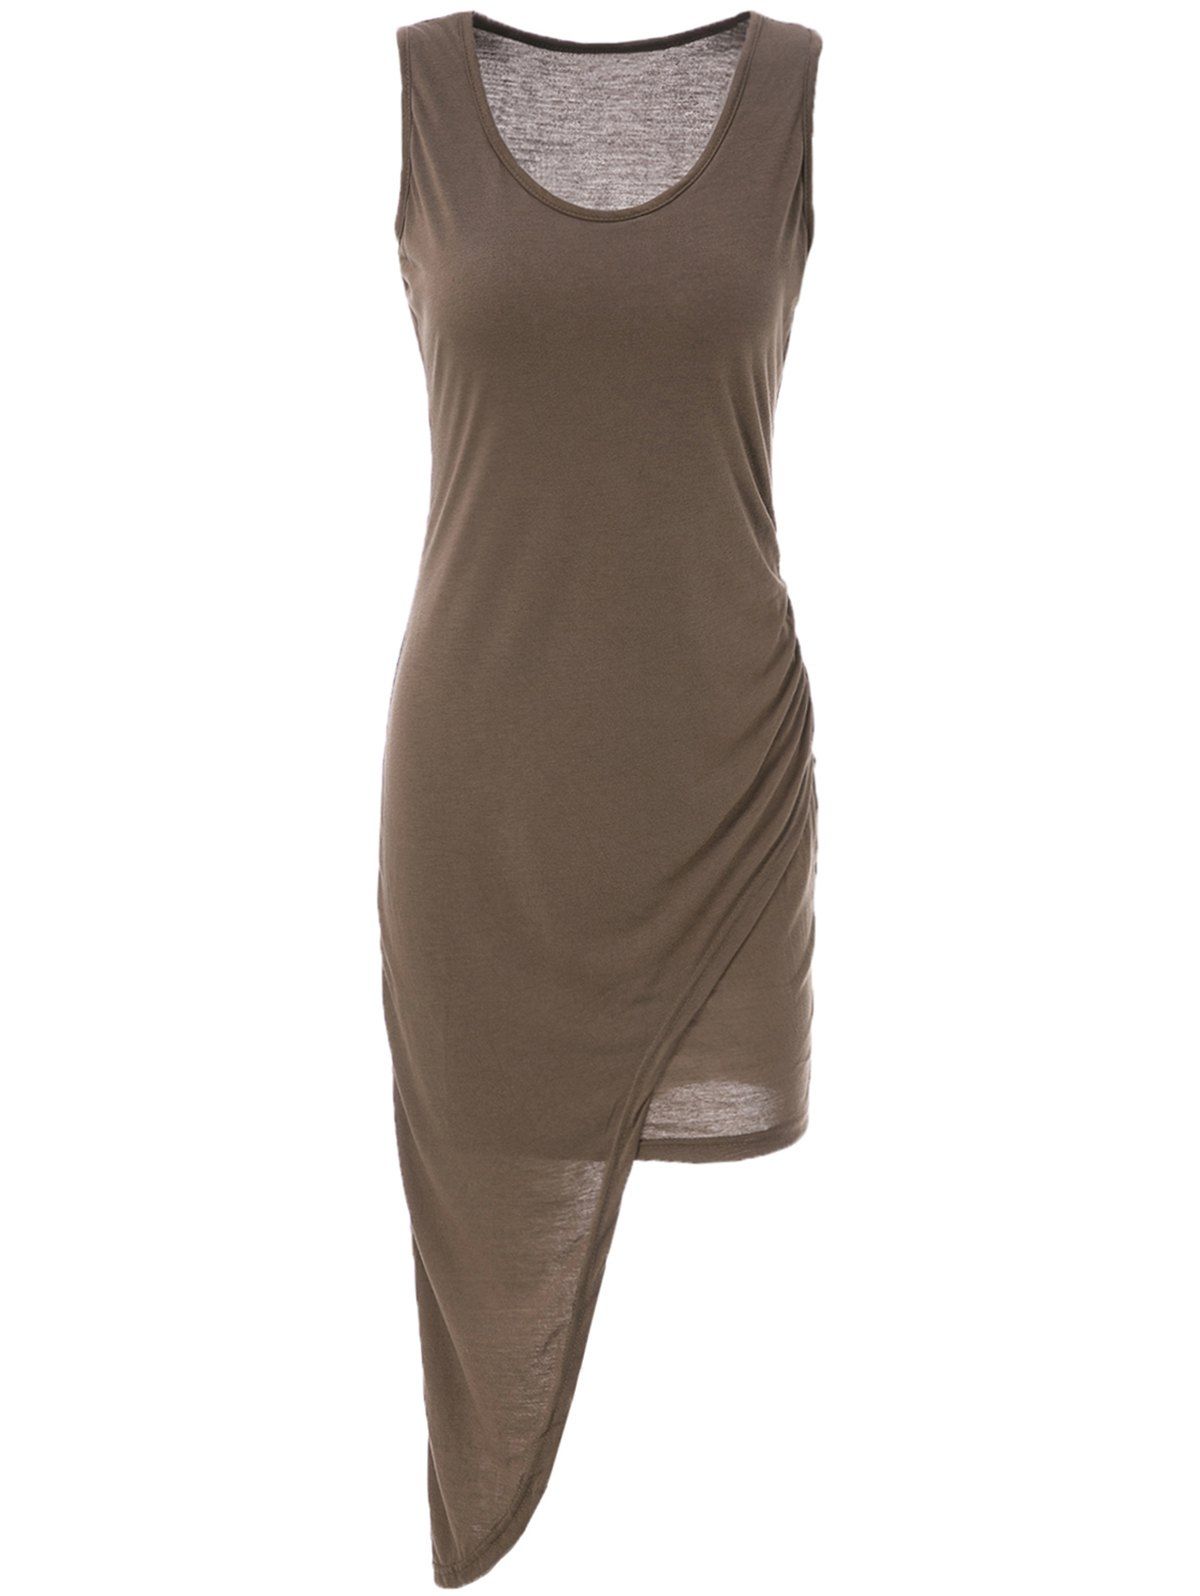 [31% OFF] U Neck Sleeveless Solid Color High-Low Hem Dress For Women ...